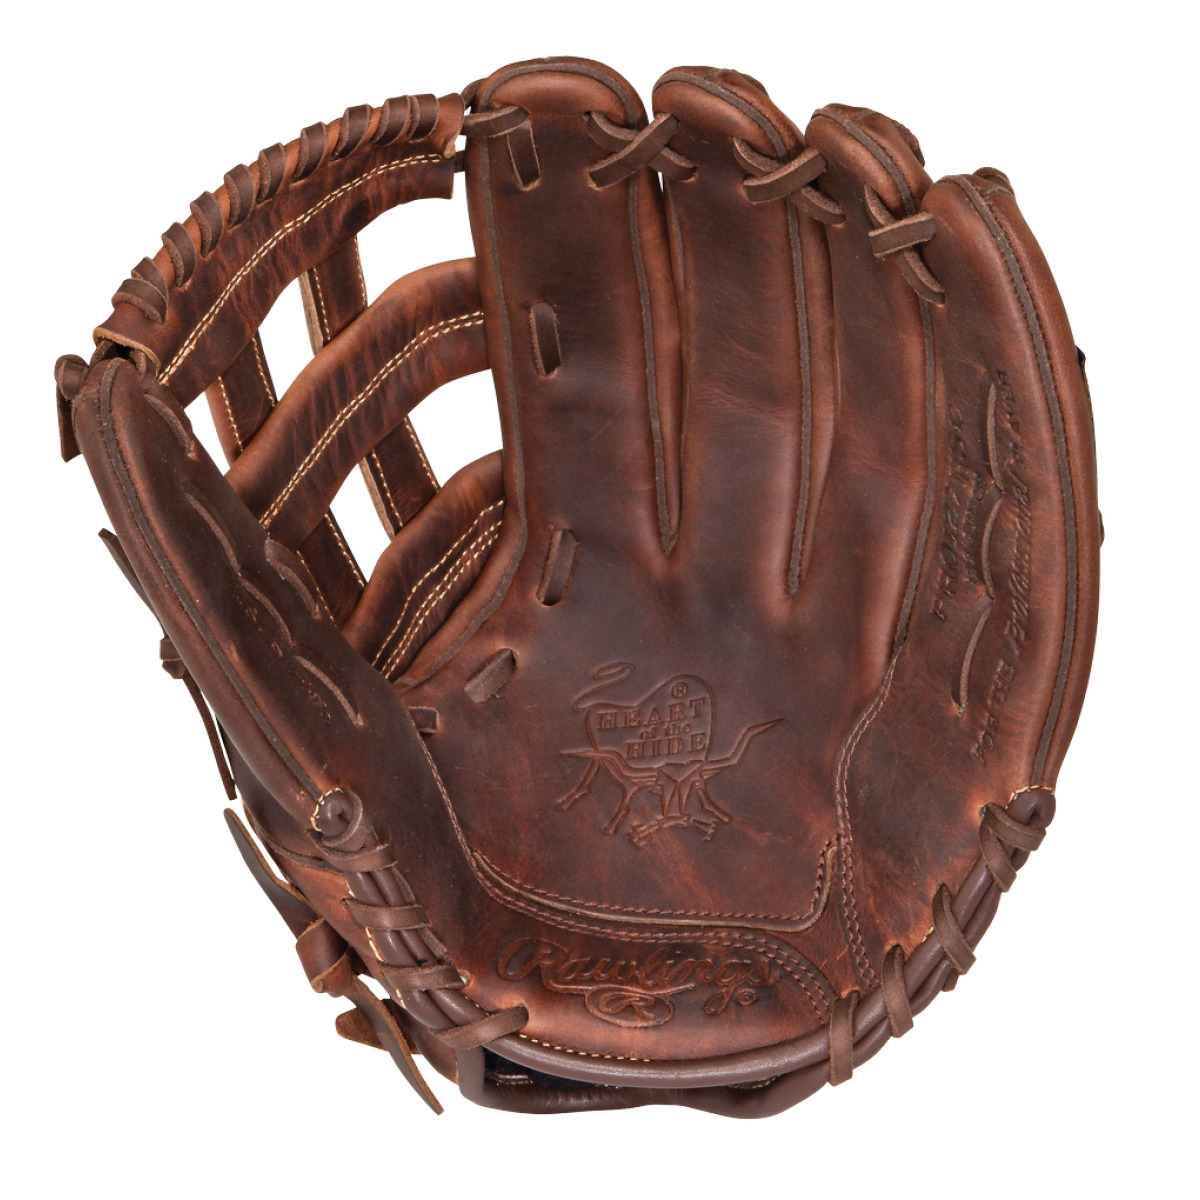 Baseball Leather Glove PNG HD Quality